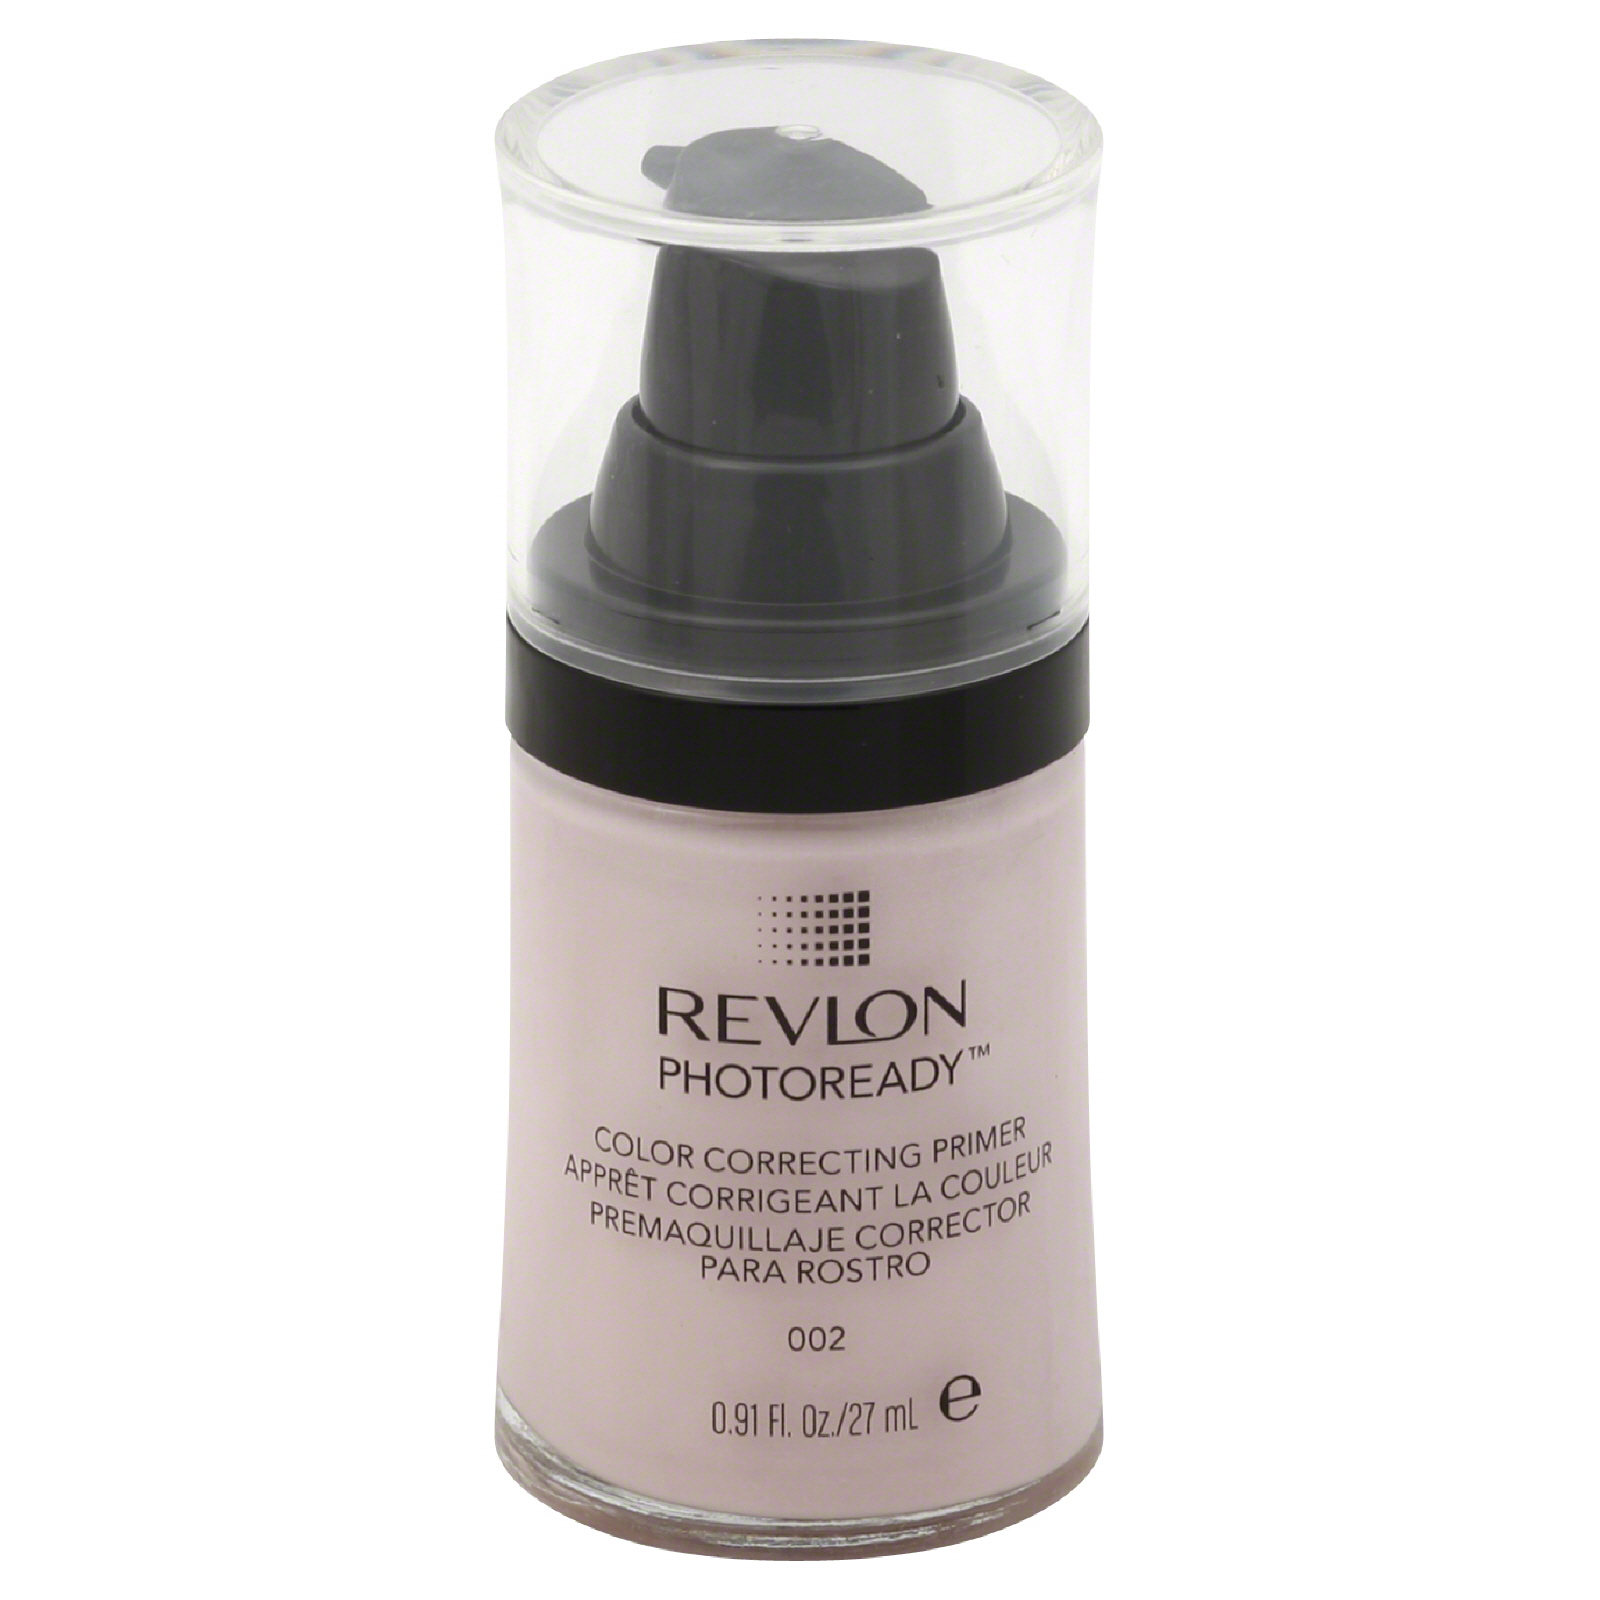 Revlon Photoready Color Correcting Primer 0.91 fl oz